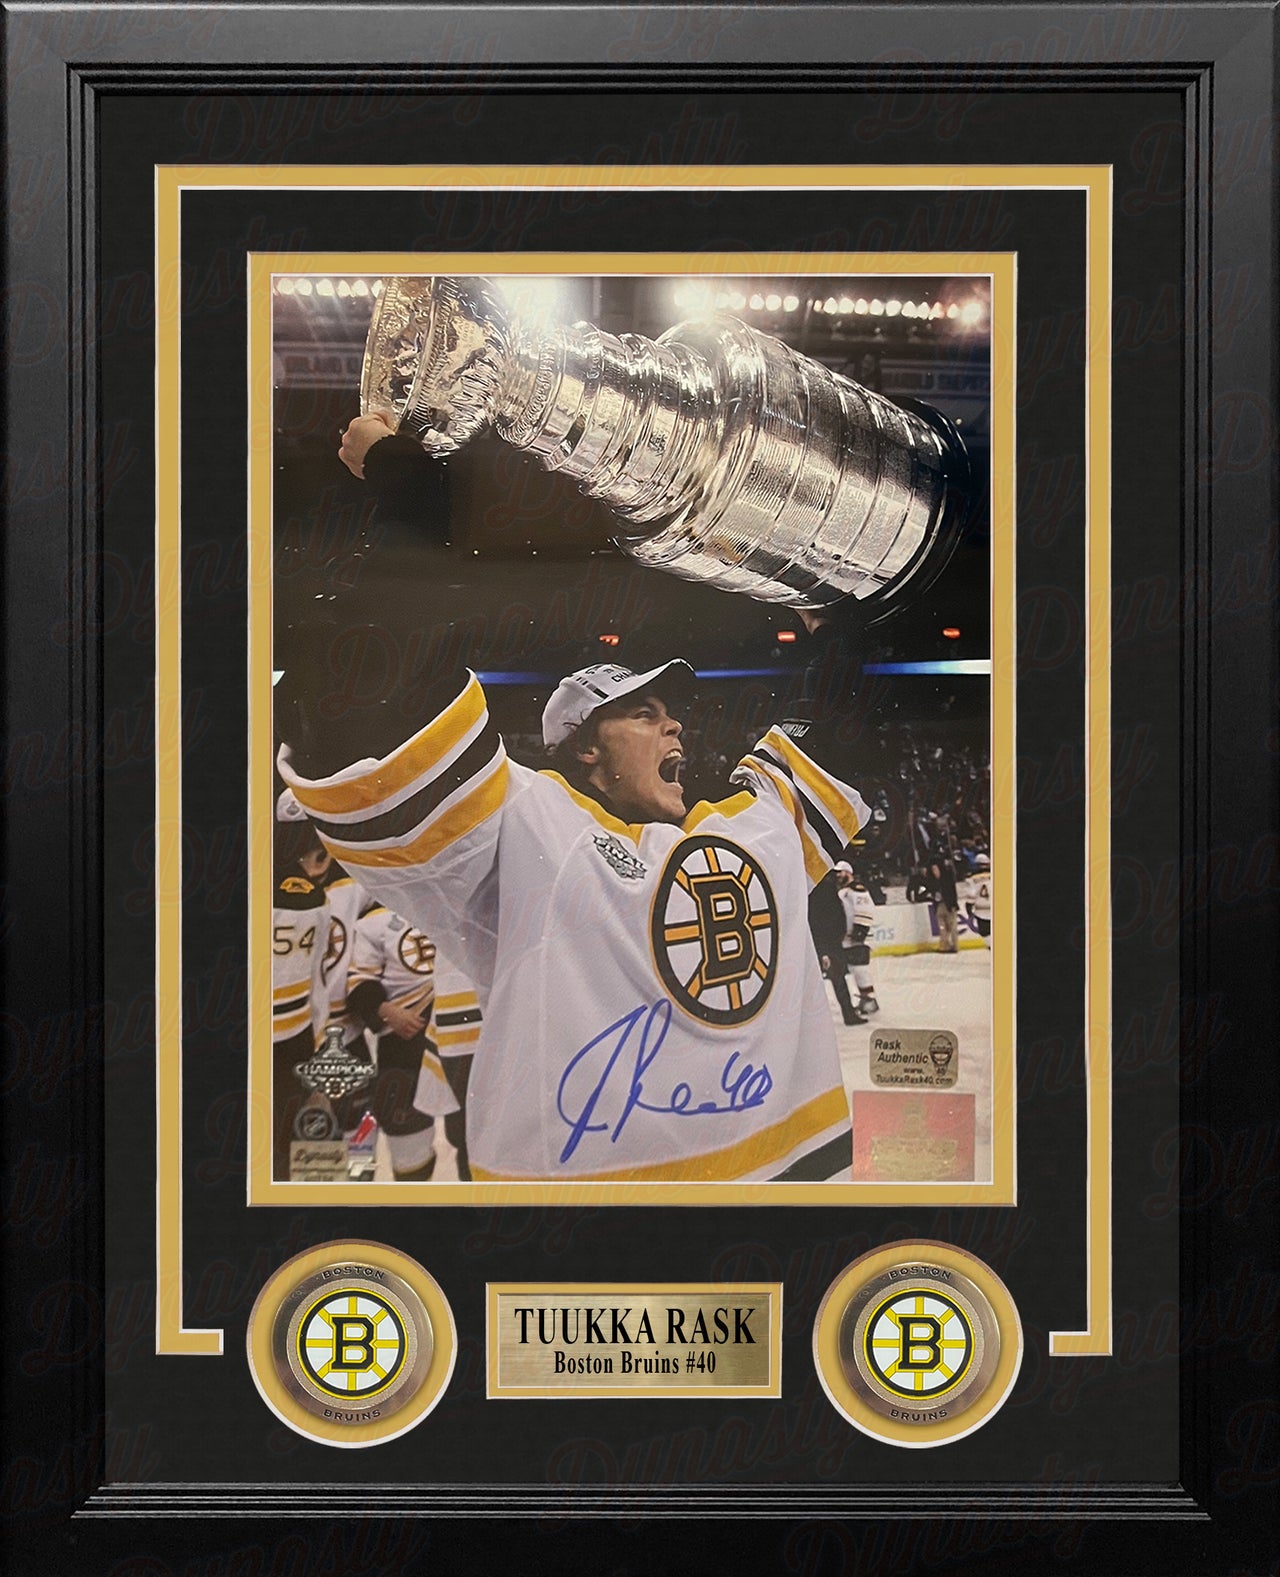 Tuukka Rask 2011 Stanley Cup Trophy Boston Bruins Autographed 8" x 10" Framed Hockey Photo